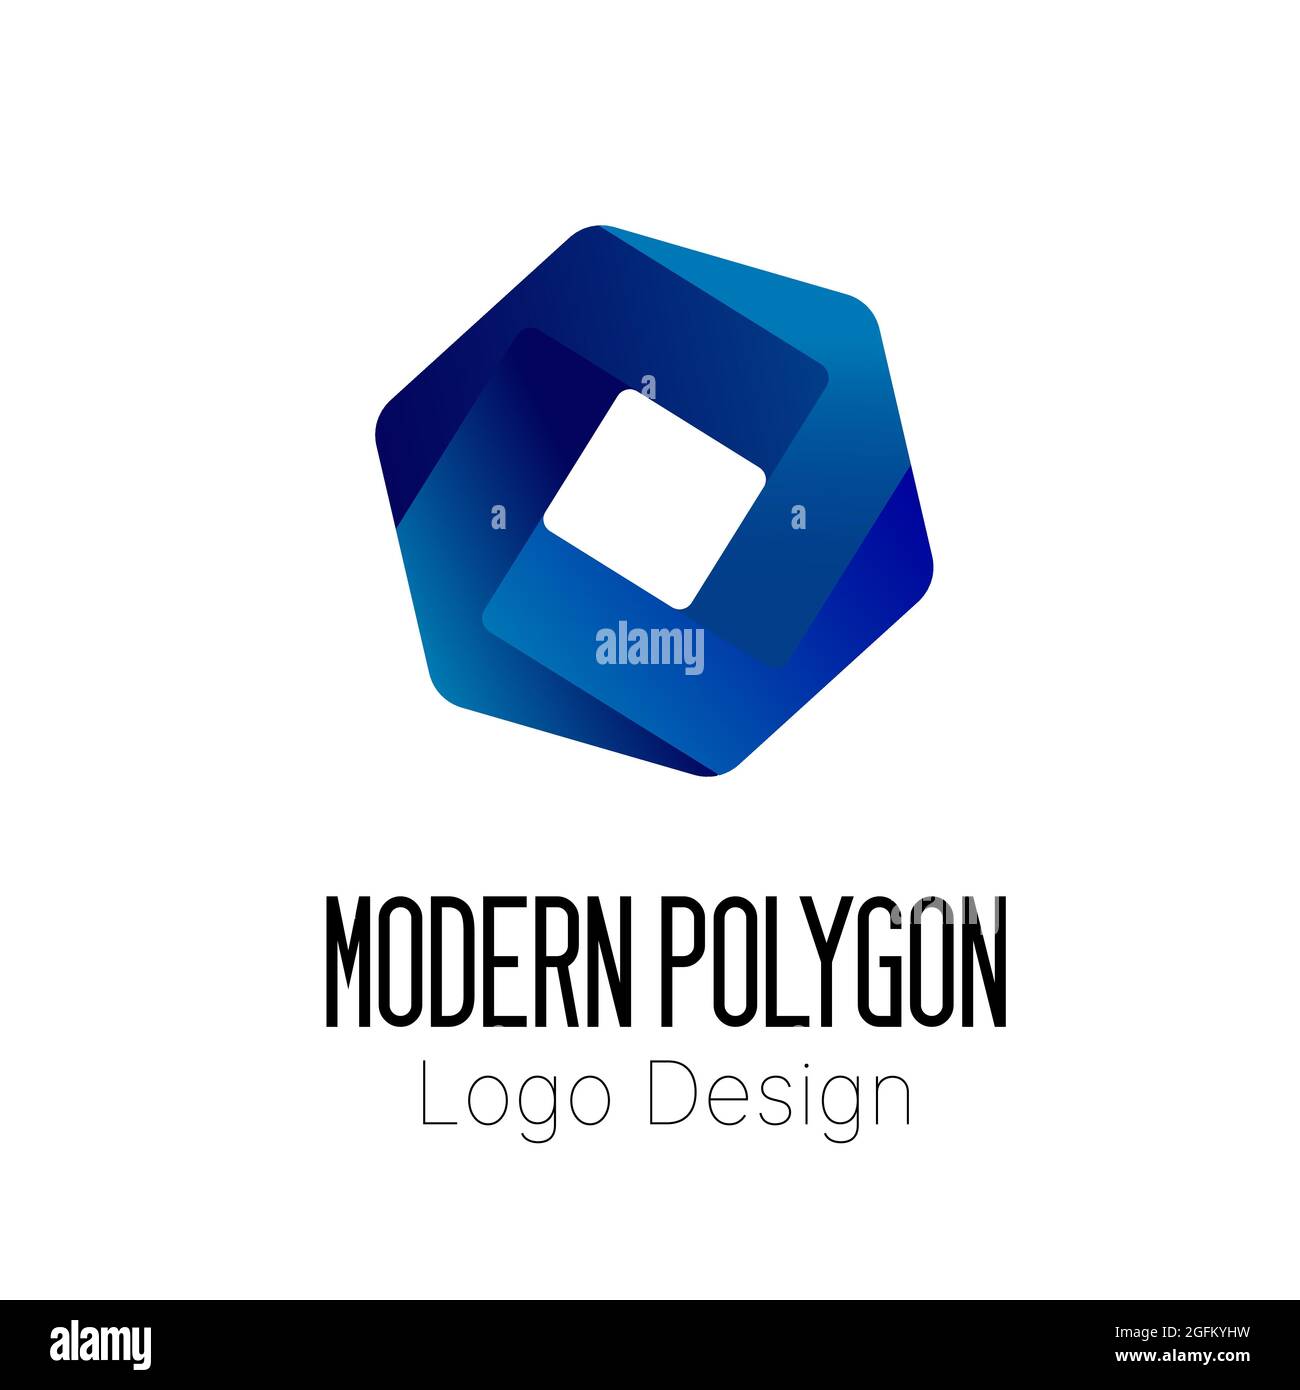 Vector illustration of abstract modern polygon logo design for business on white backgroud. Stock Vector